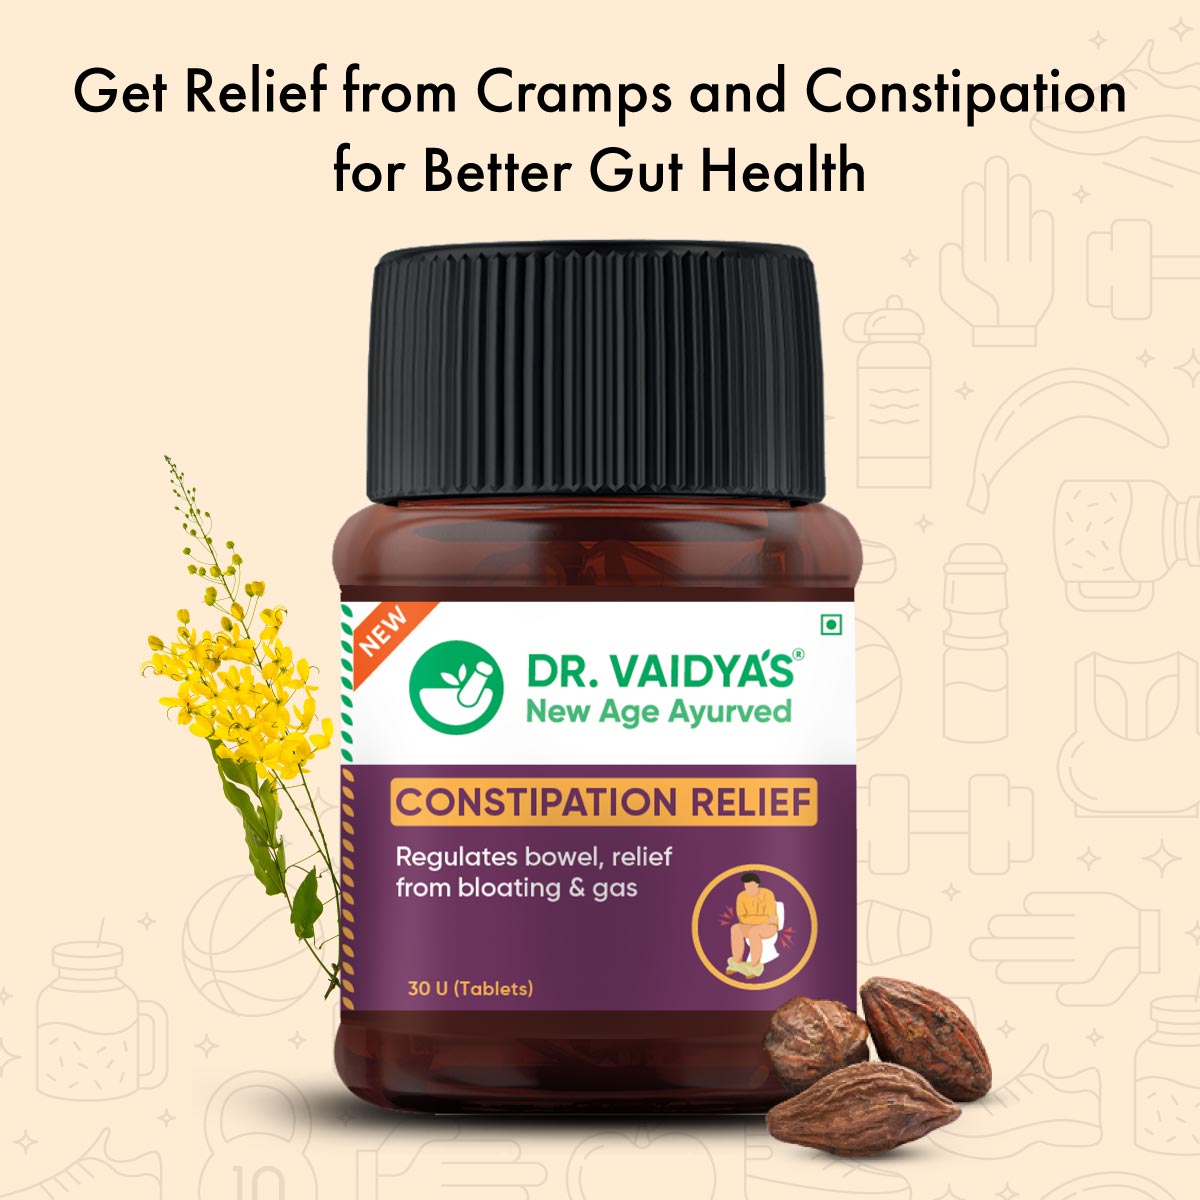 Dr. Vaidya's ConstipationRelief: Gut Care